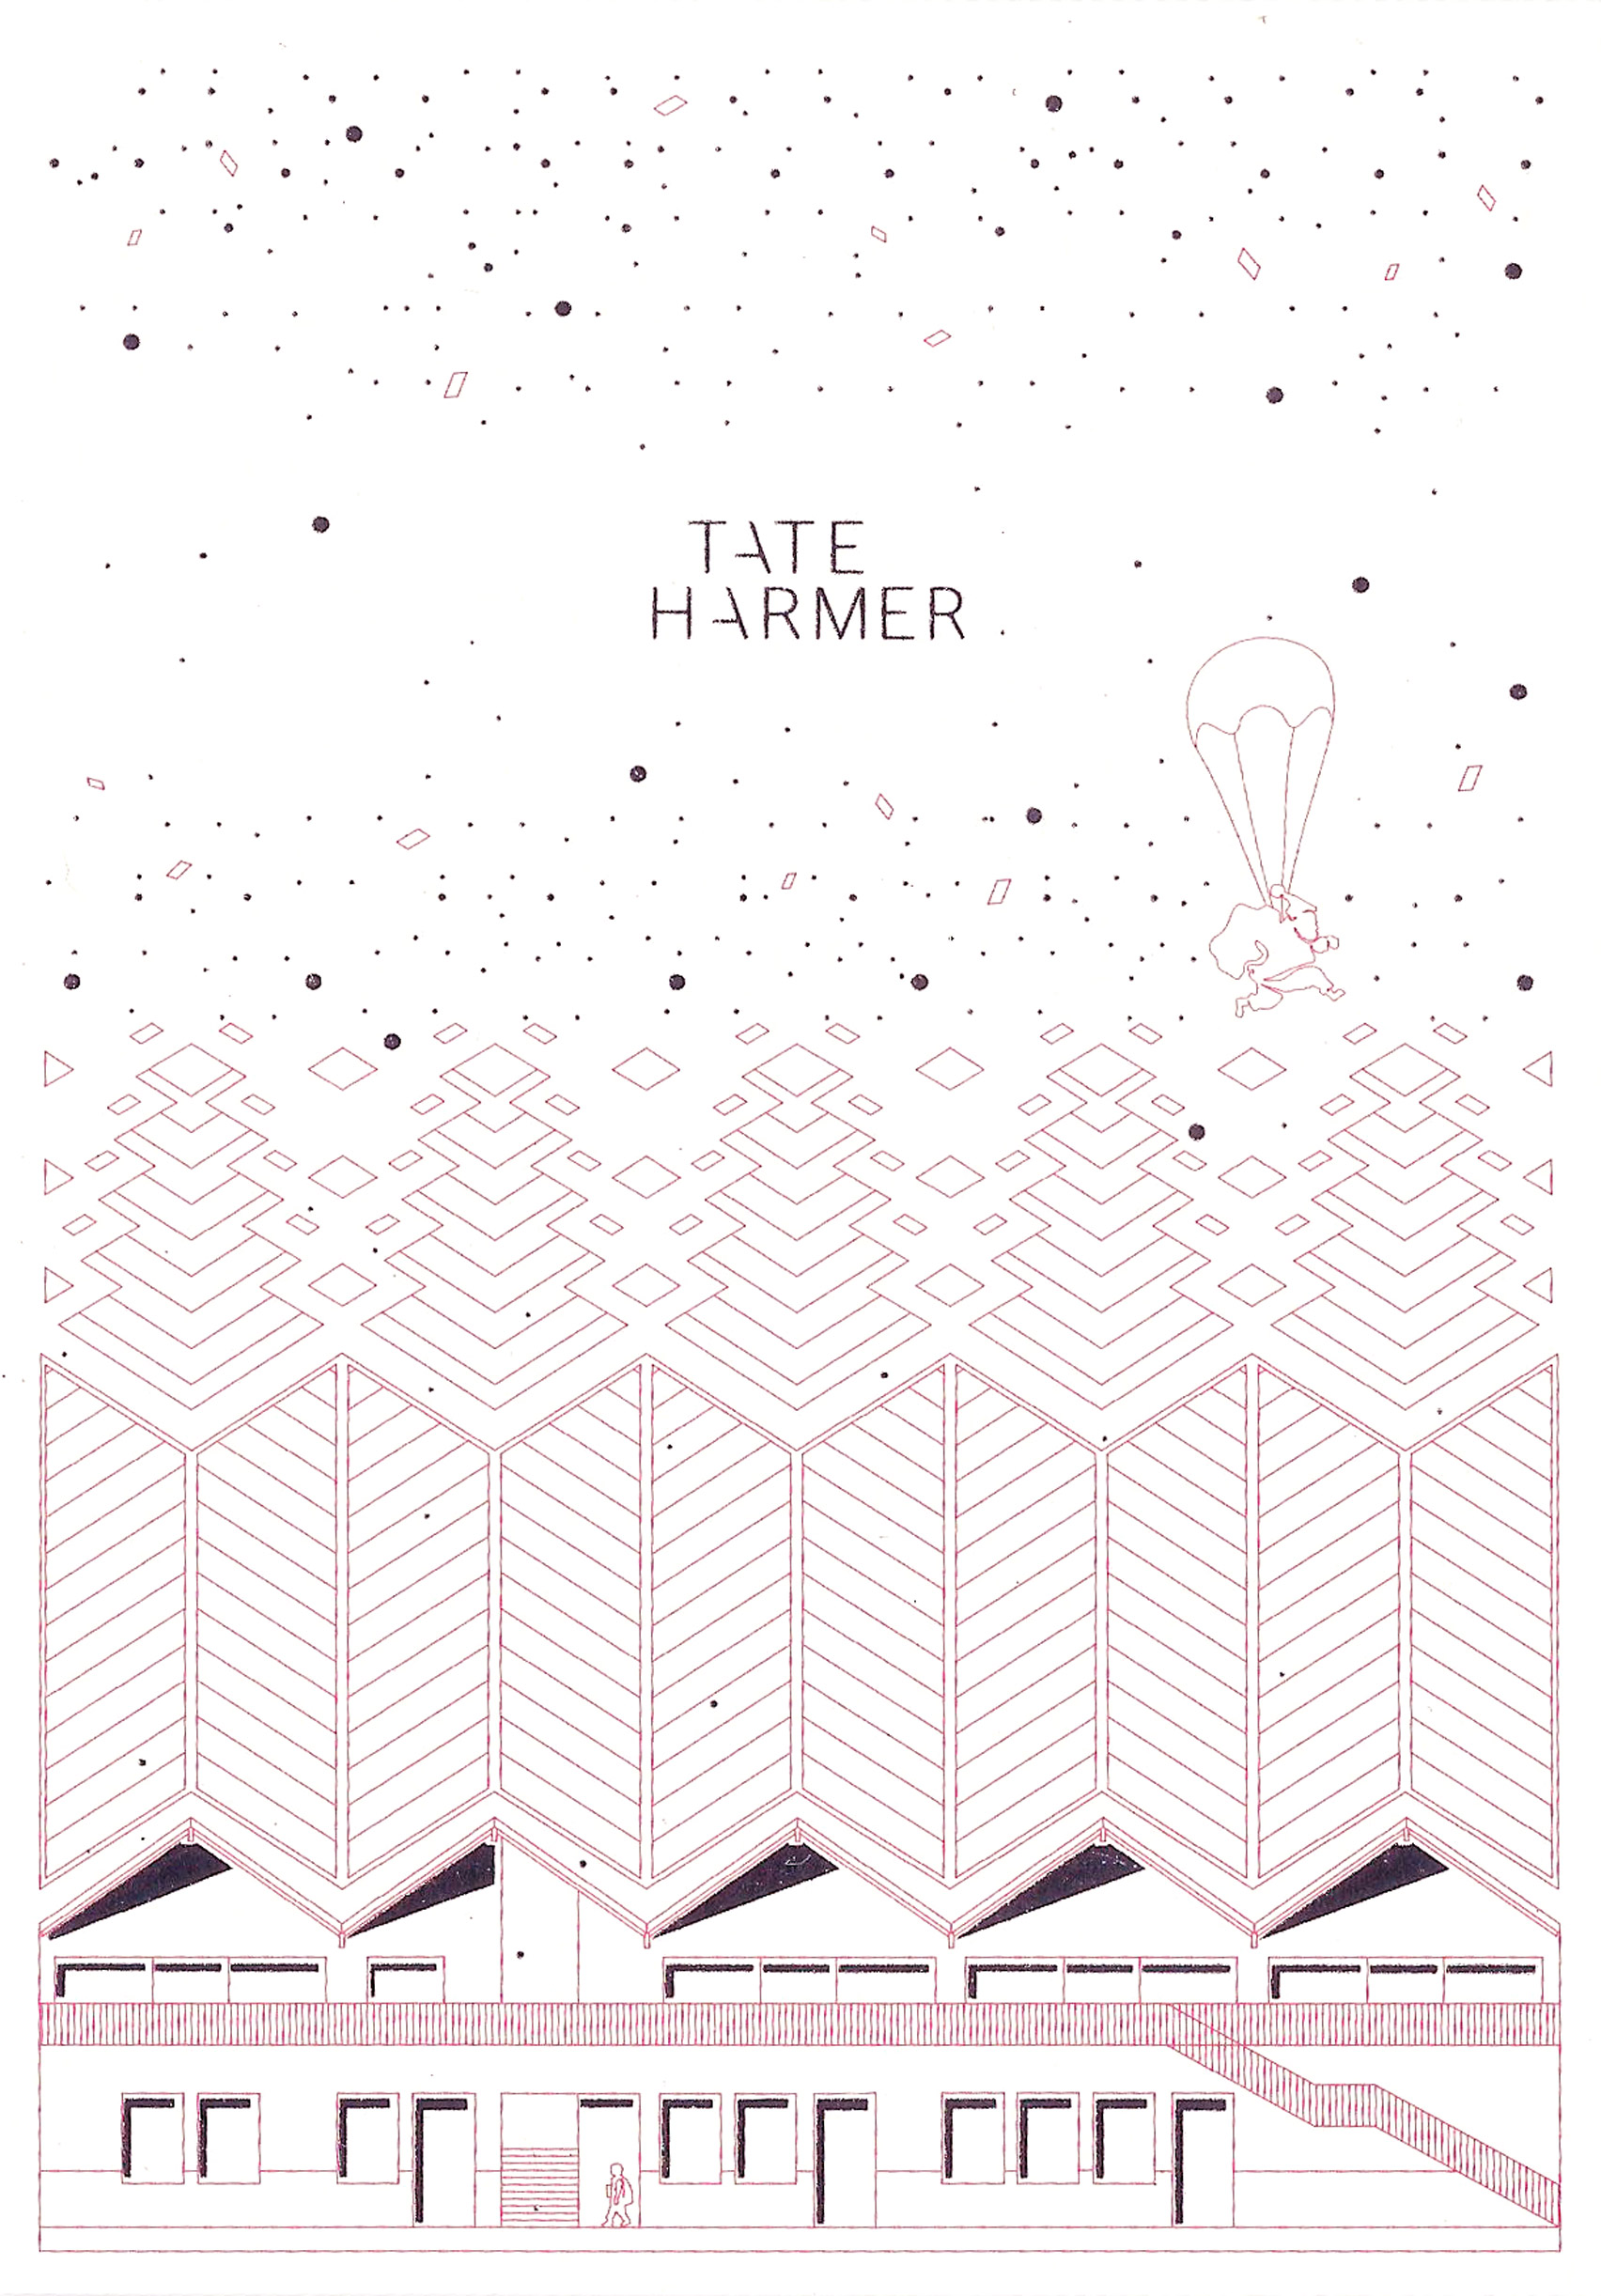 Tate Harmer's 2018 Christmas card